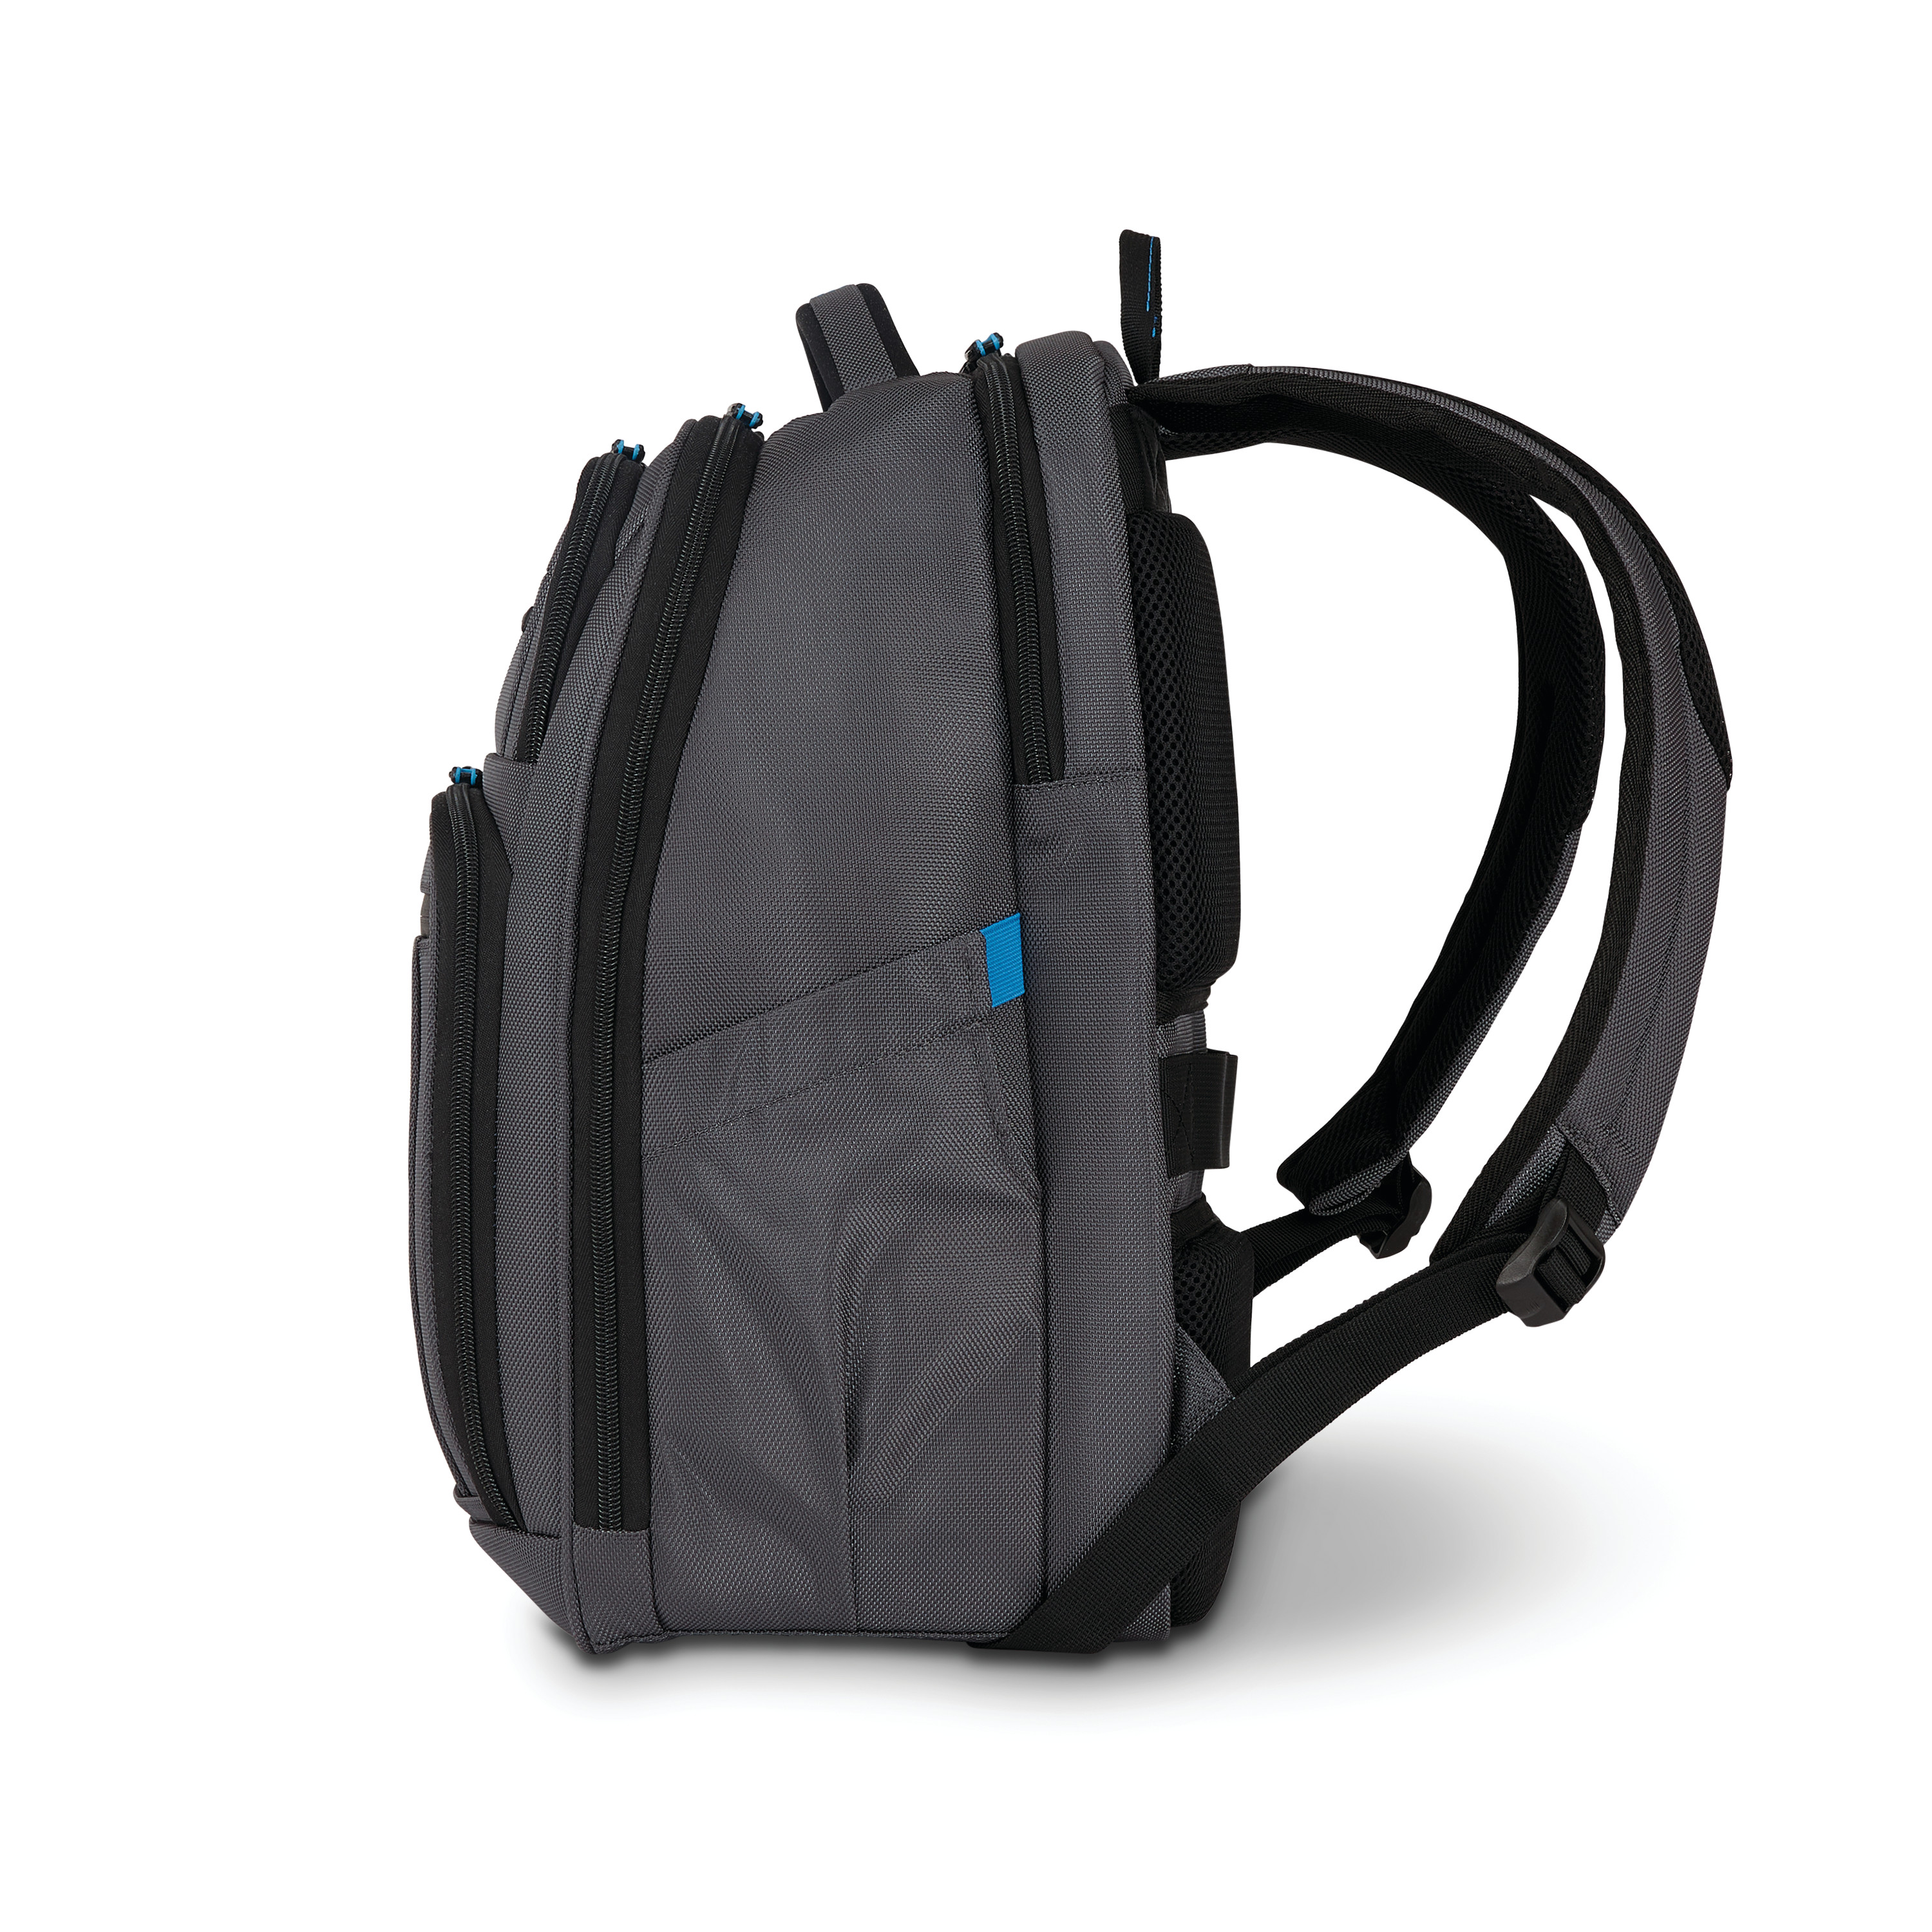 Buy Novex Laptop Backpack US 74.99 | Samsonite USD for